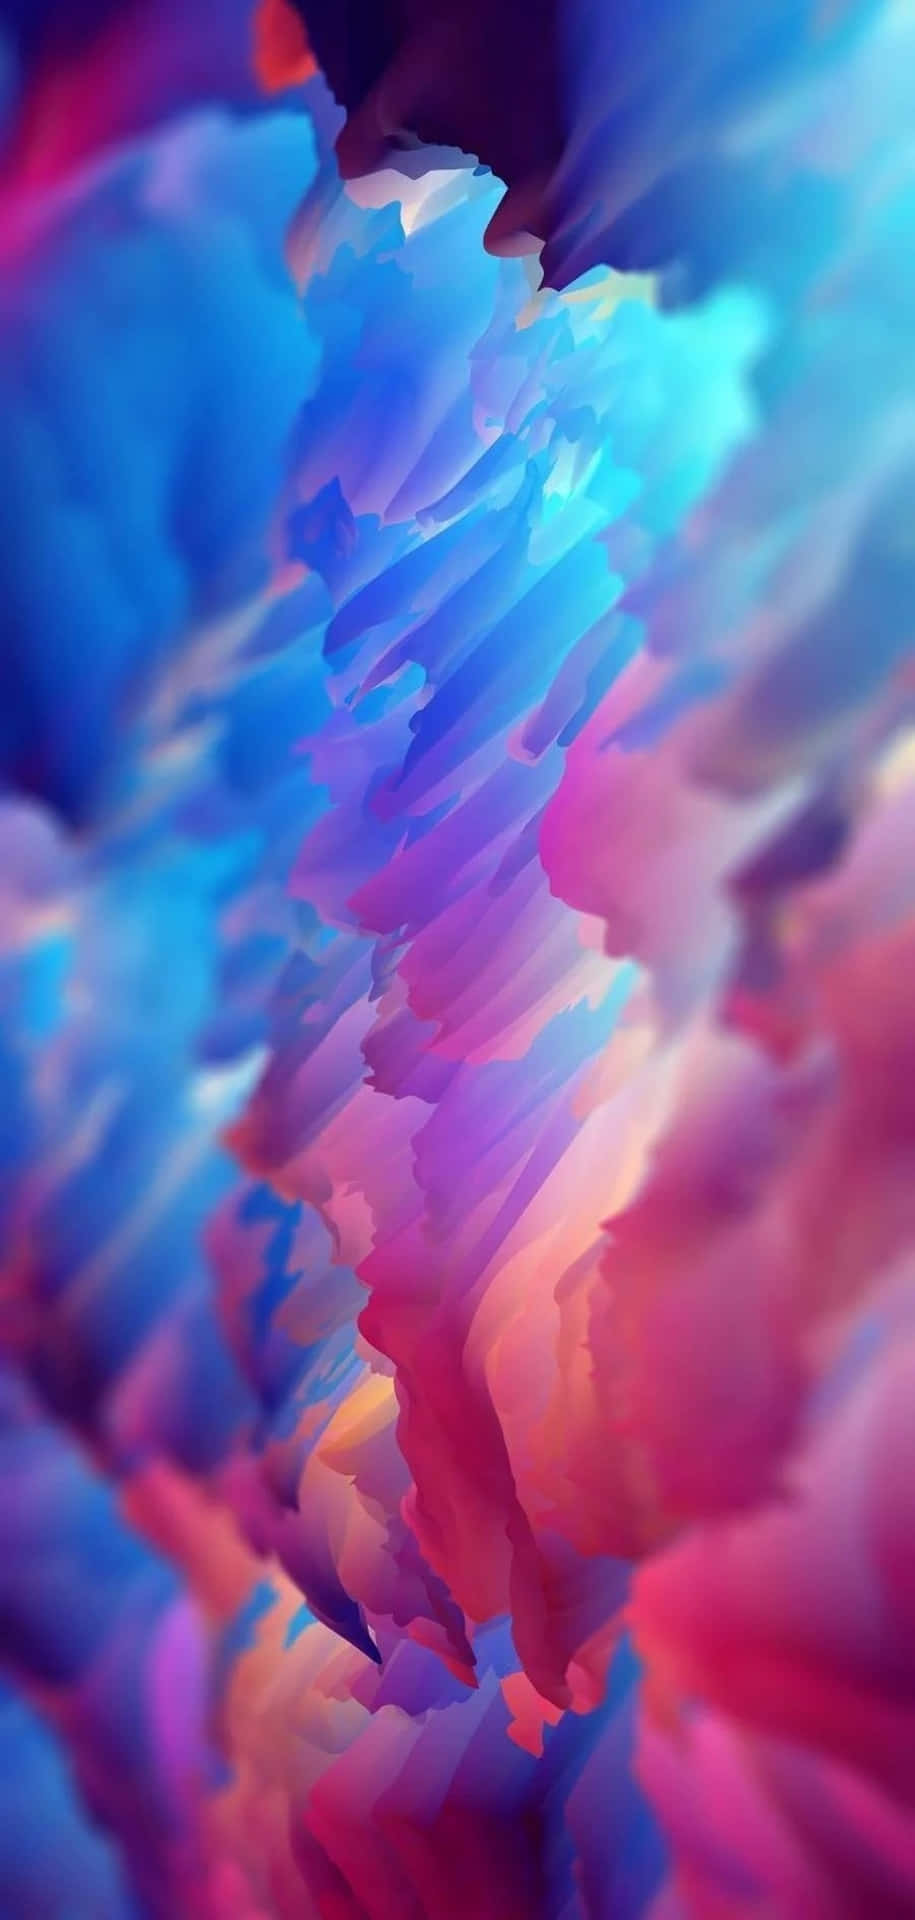 Vibrant Abstract Digital Art On 4k Phone Background